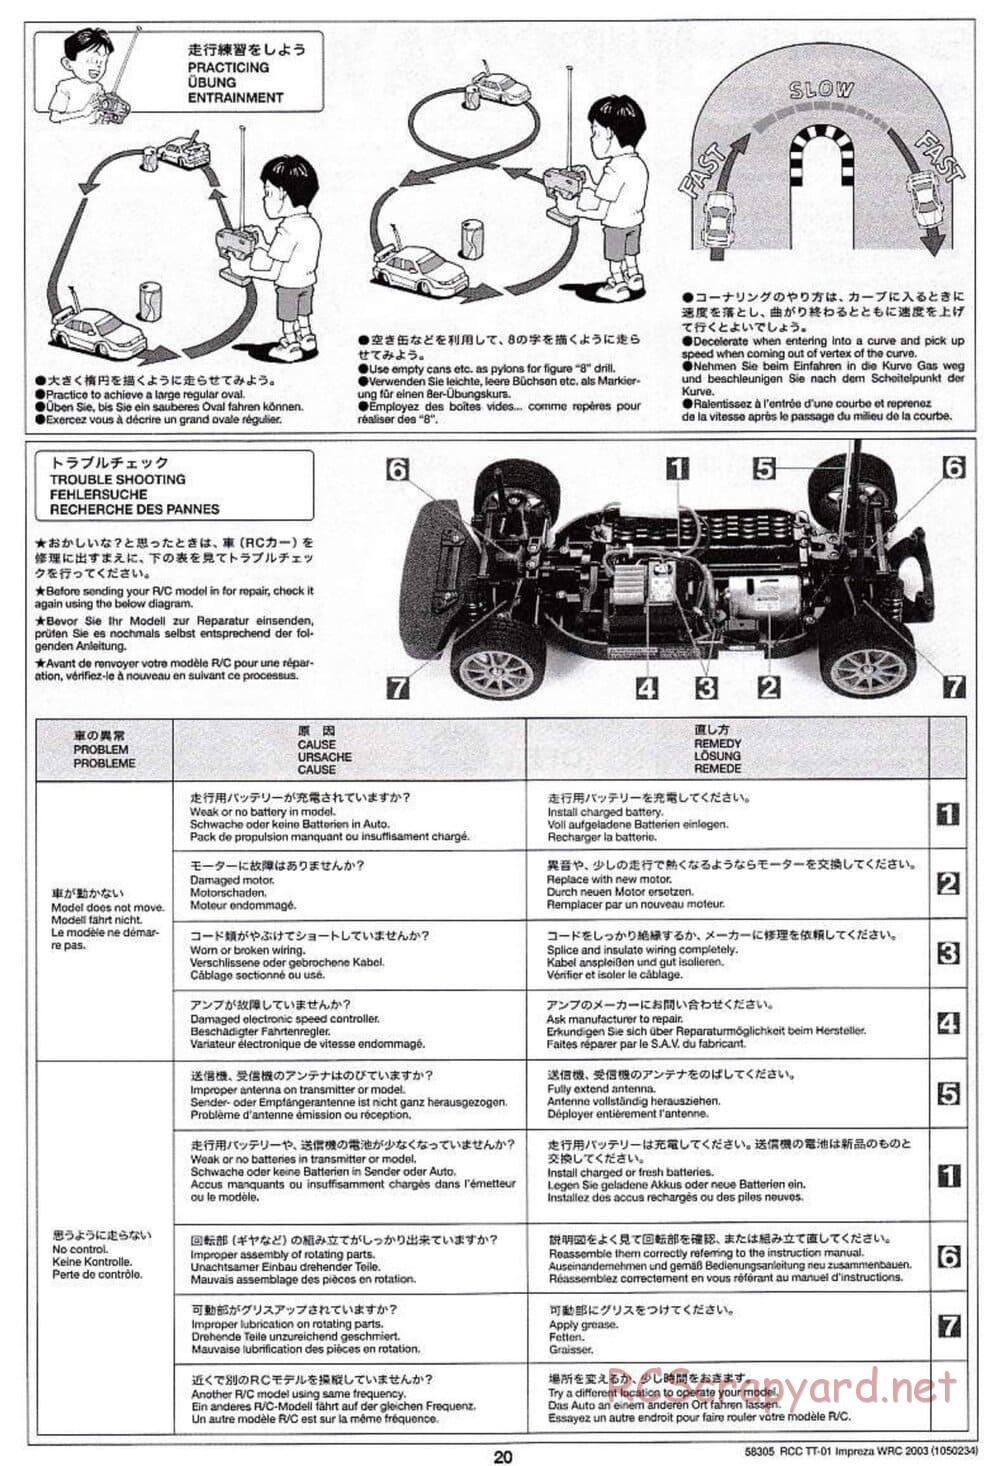 Tamiya - Subaru Impreza WRC 2003 - TT-01 Chassis - Manual - Page 20